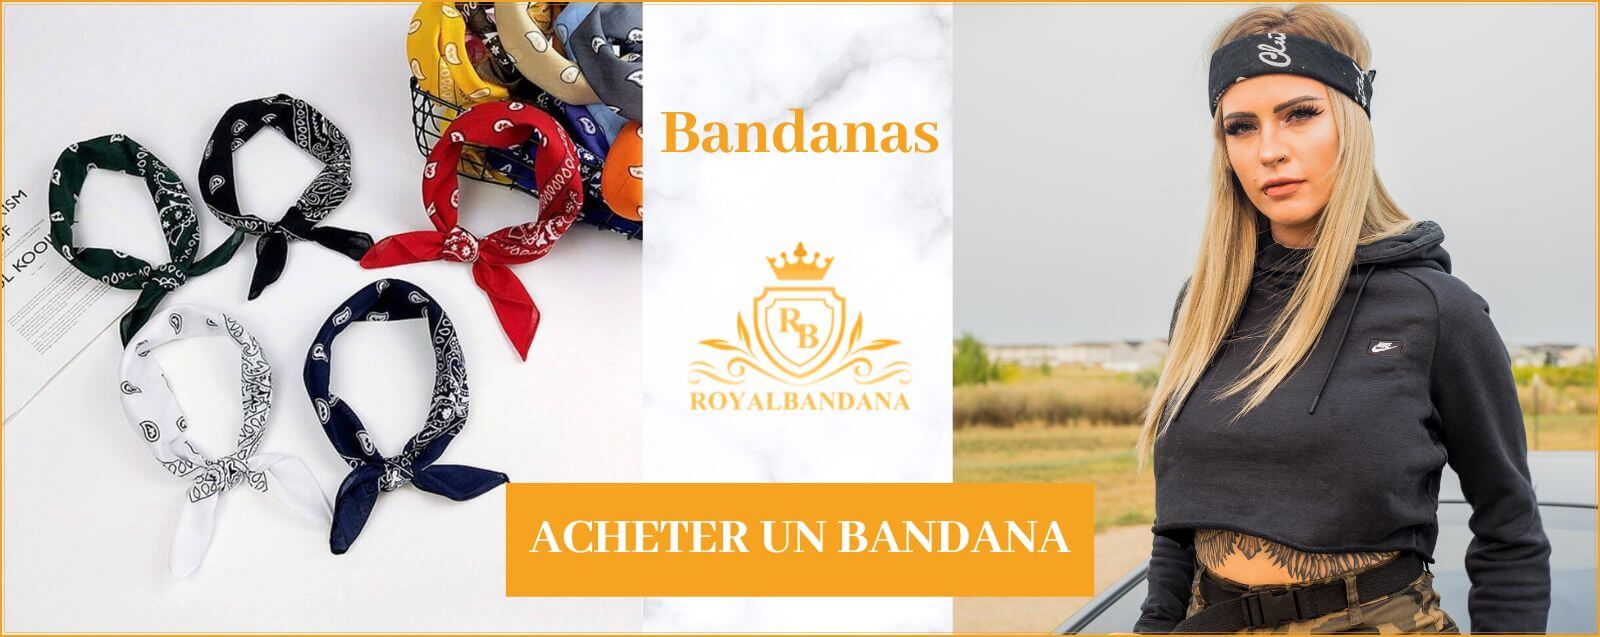 acheter-un-bandana-royalbandana-mode